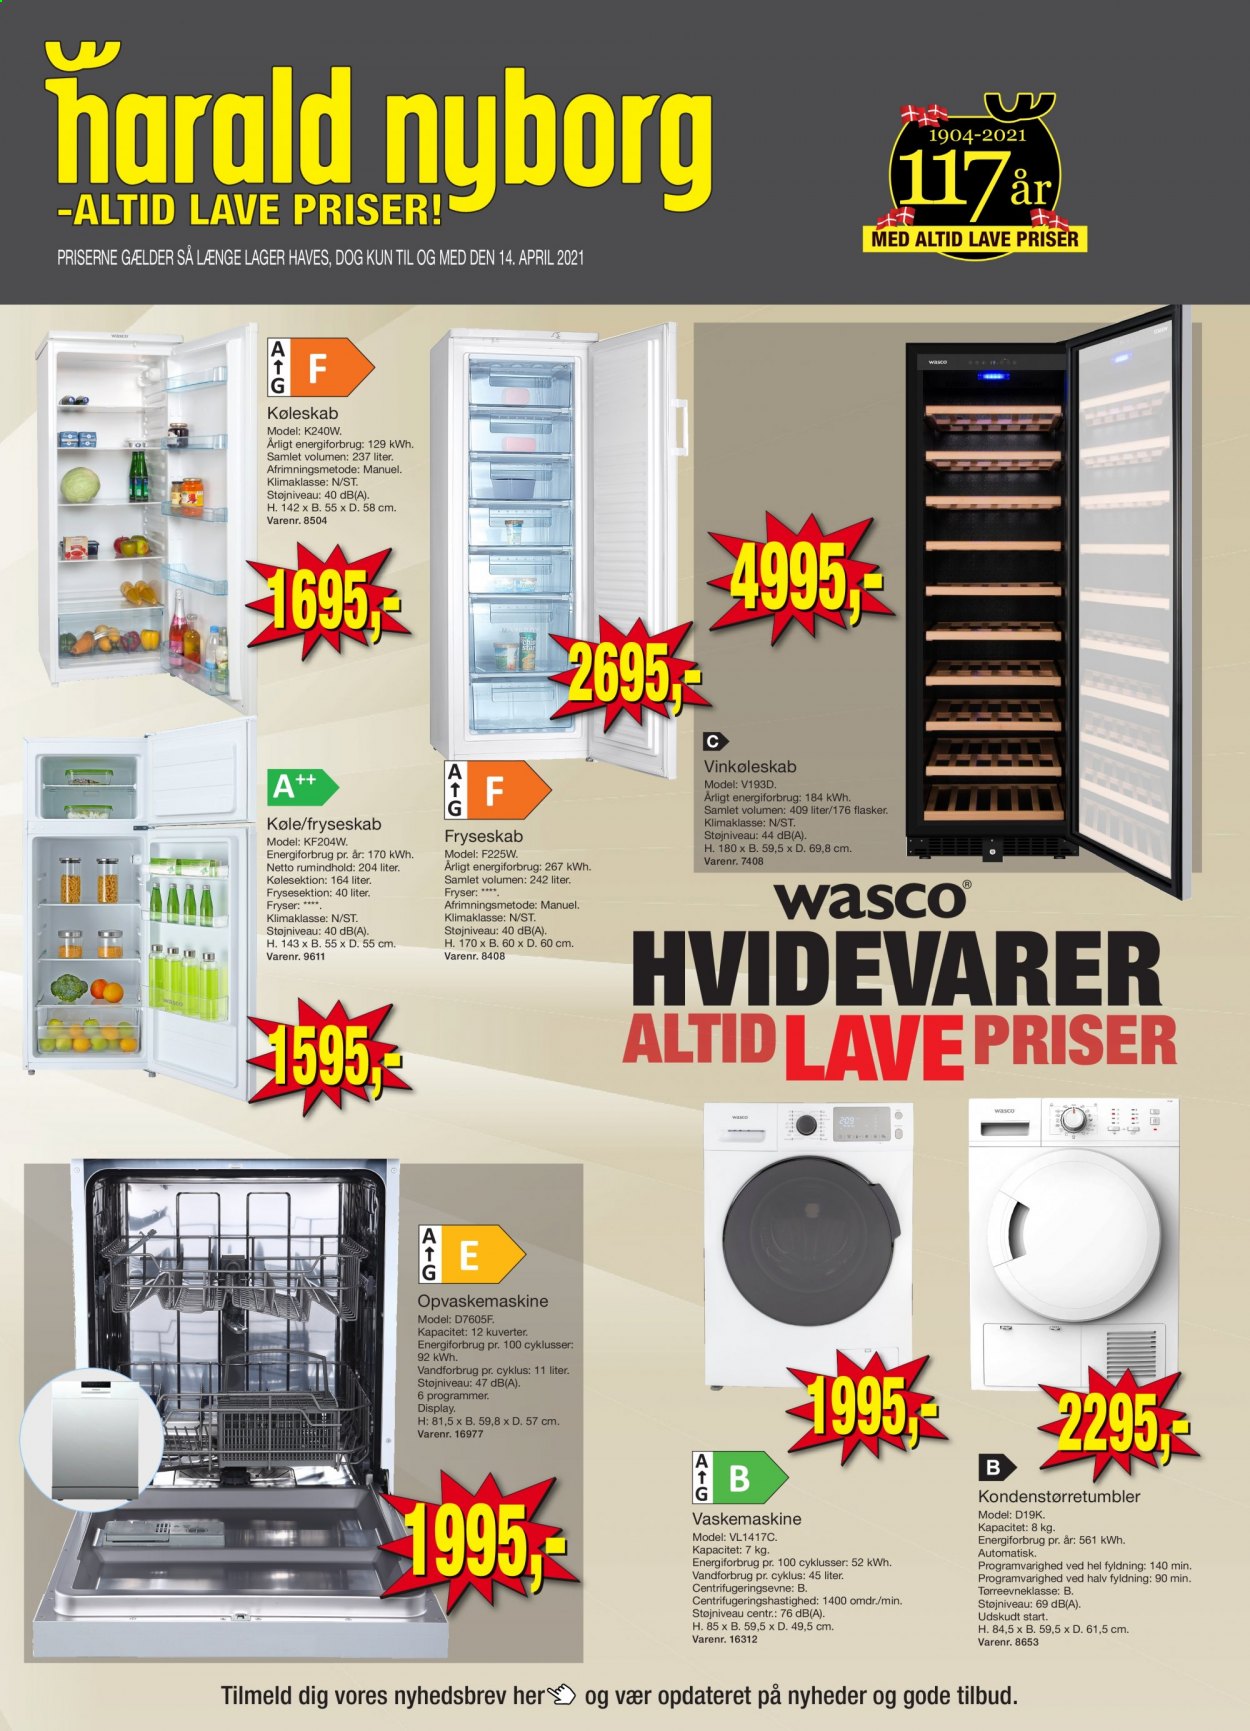 thumbnail - Harald Nyborg tilbud  - 8.4.2021 - 14.4.2021 - tilbudsprodukter - fryser, køleskab, vinkøleskab, opvaskemaskine. Side 1.